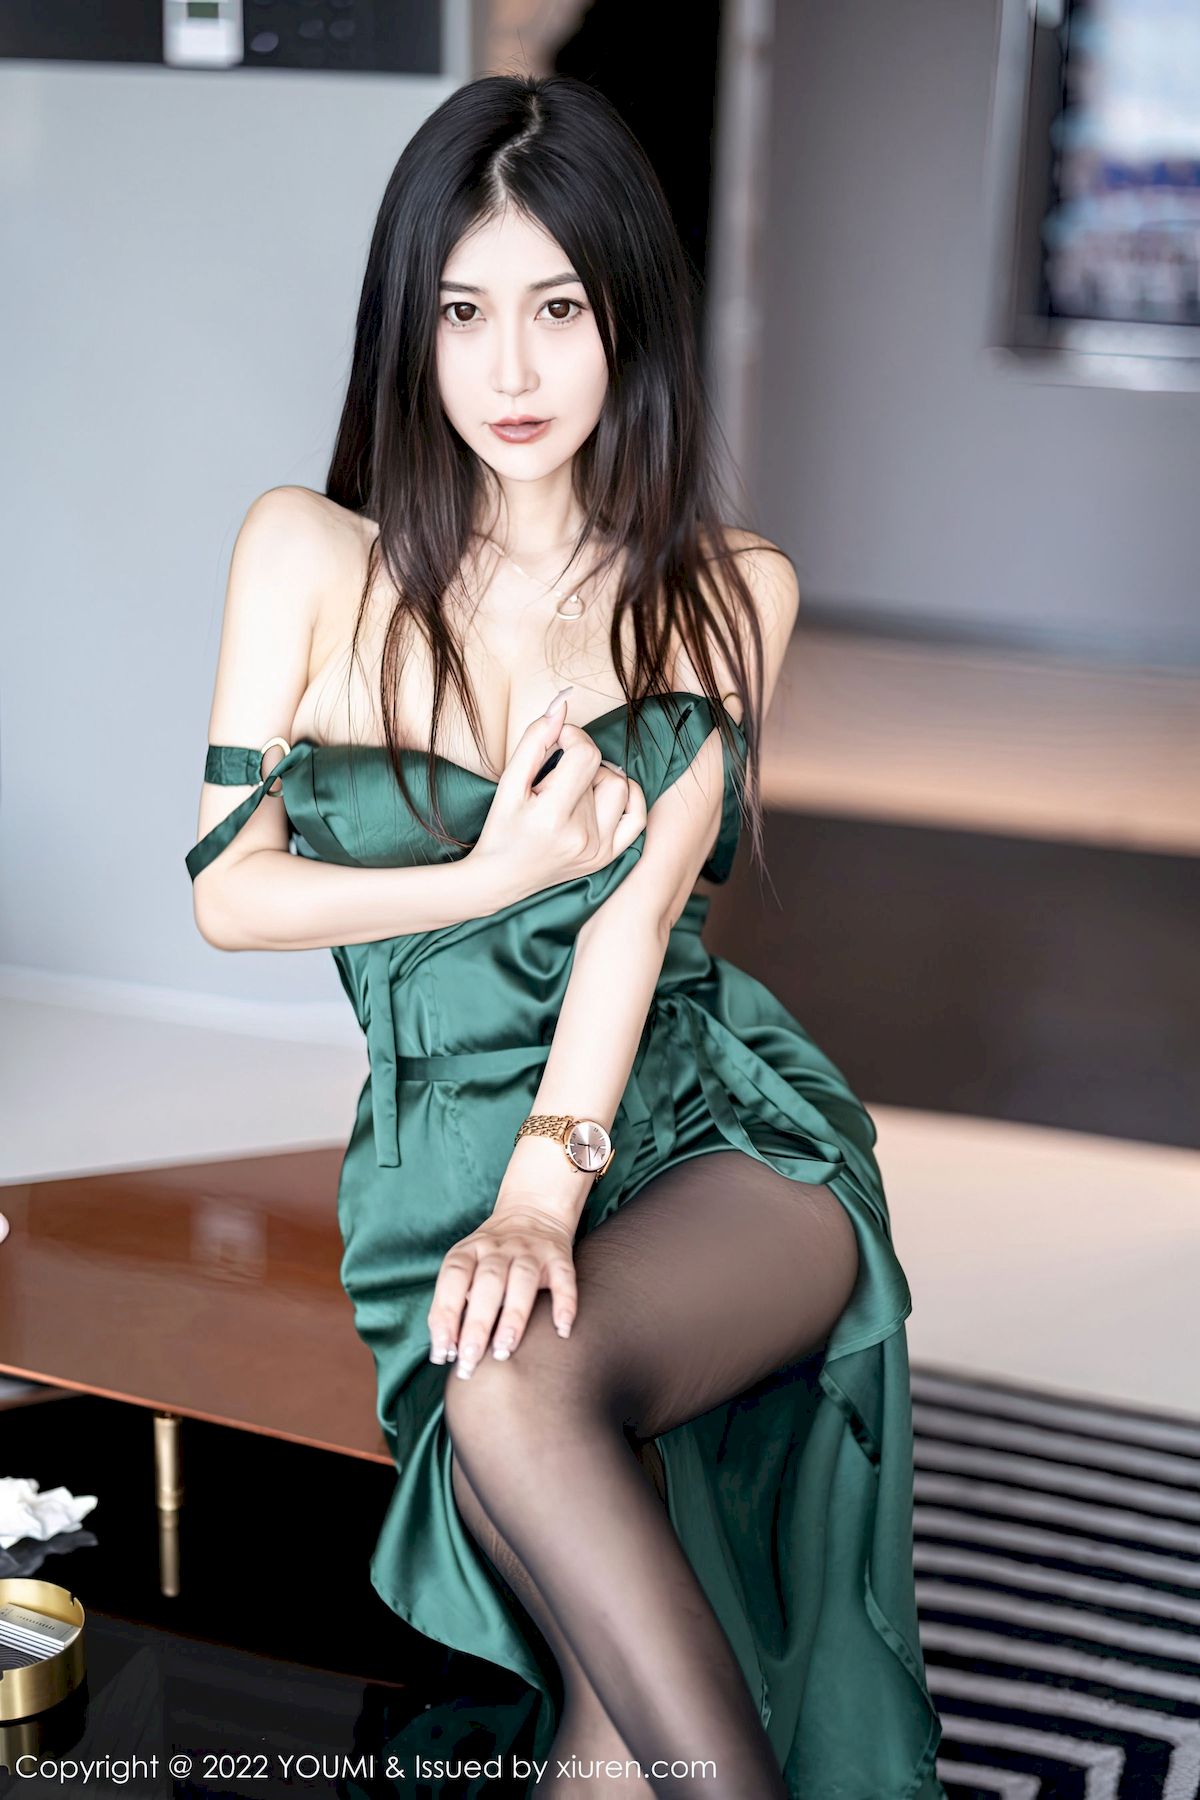 laura阿姣 - 暗绿色长裙+黑丝长腿性感写真